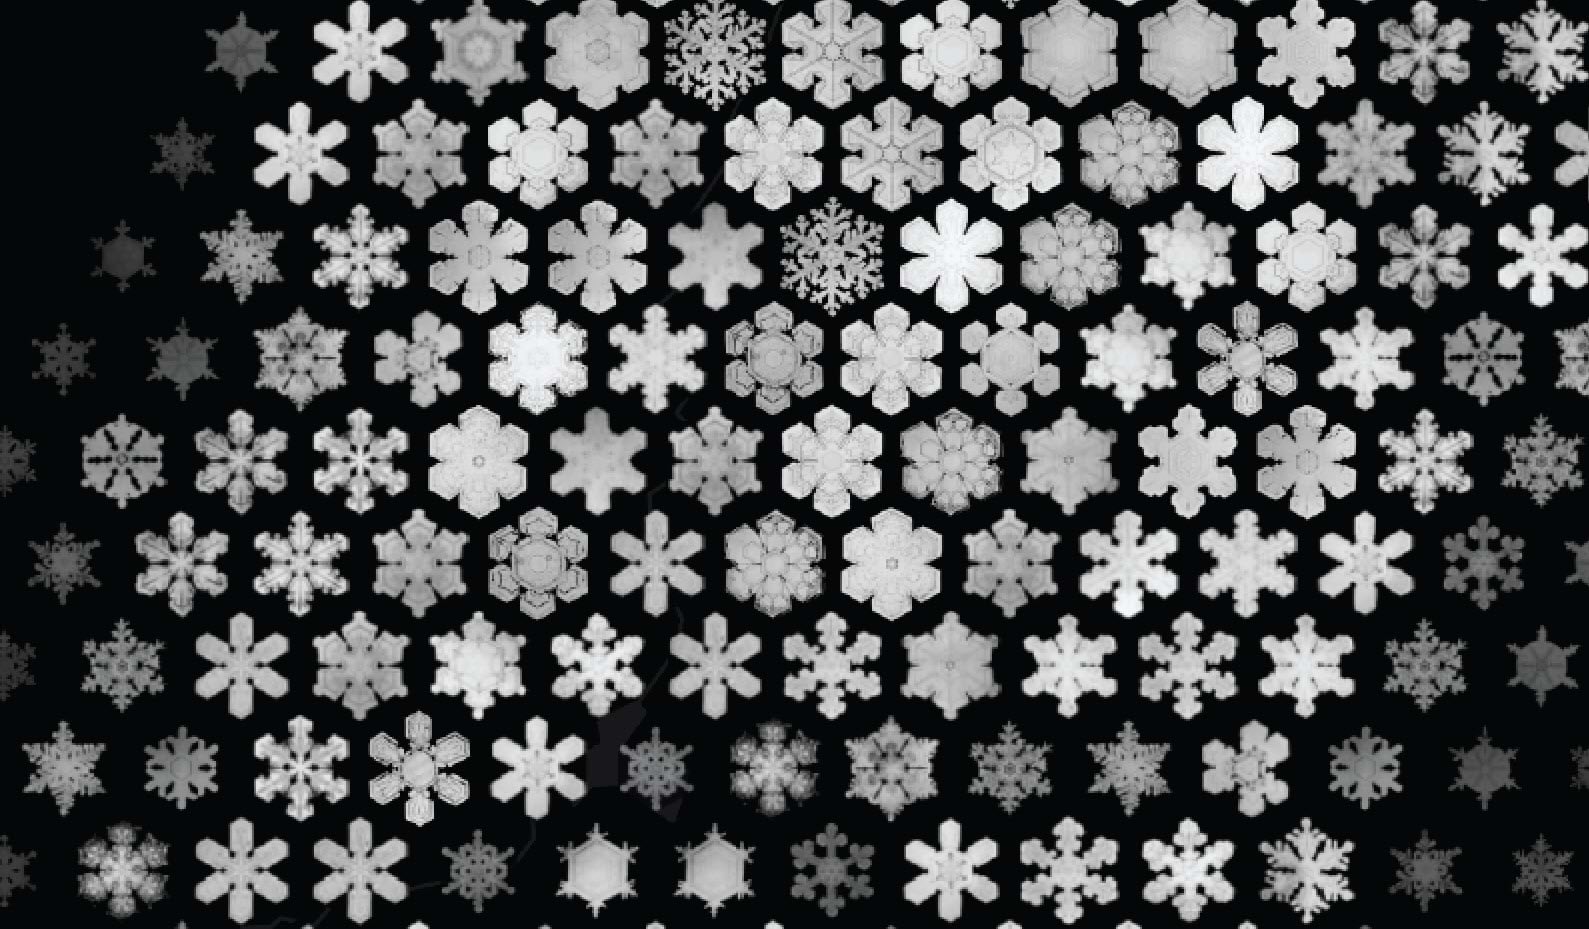 Snowflake symbols varied by attribute